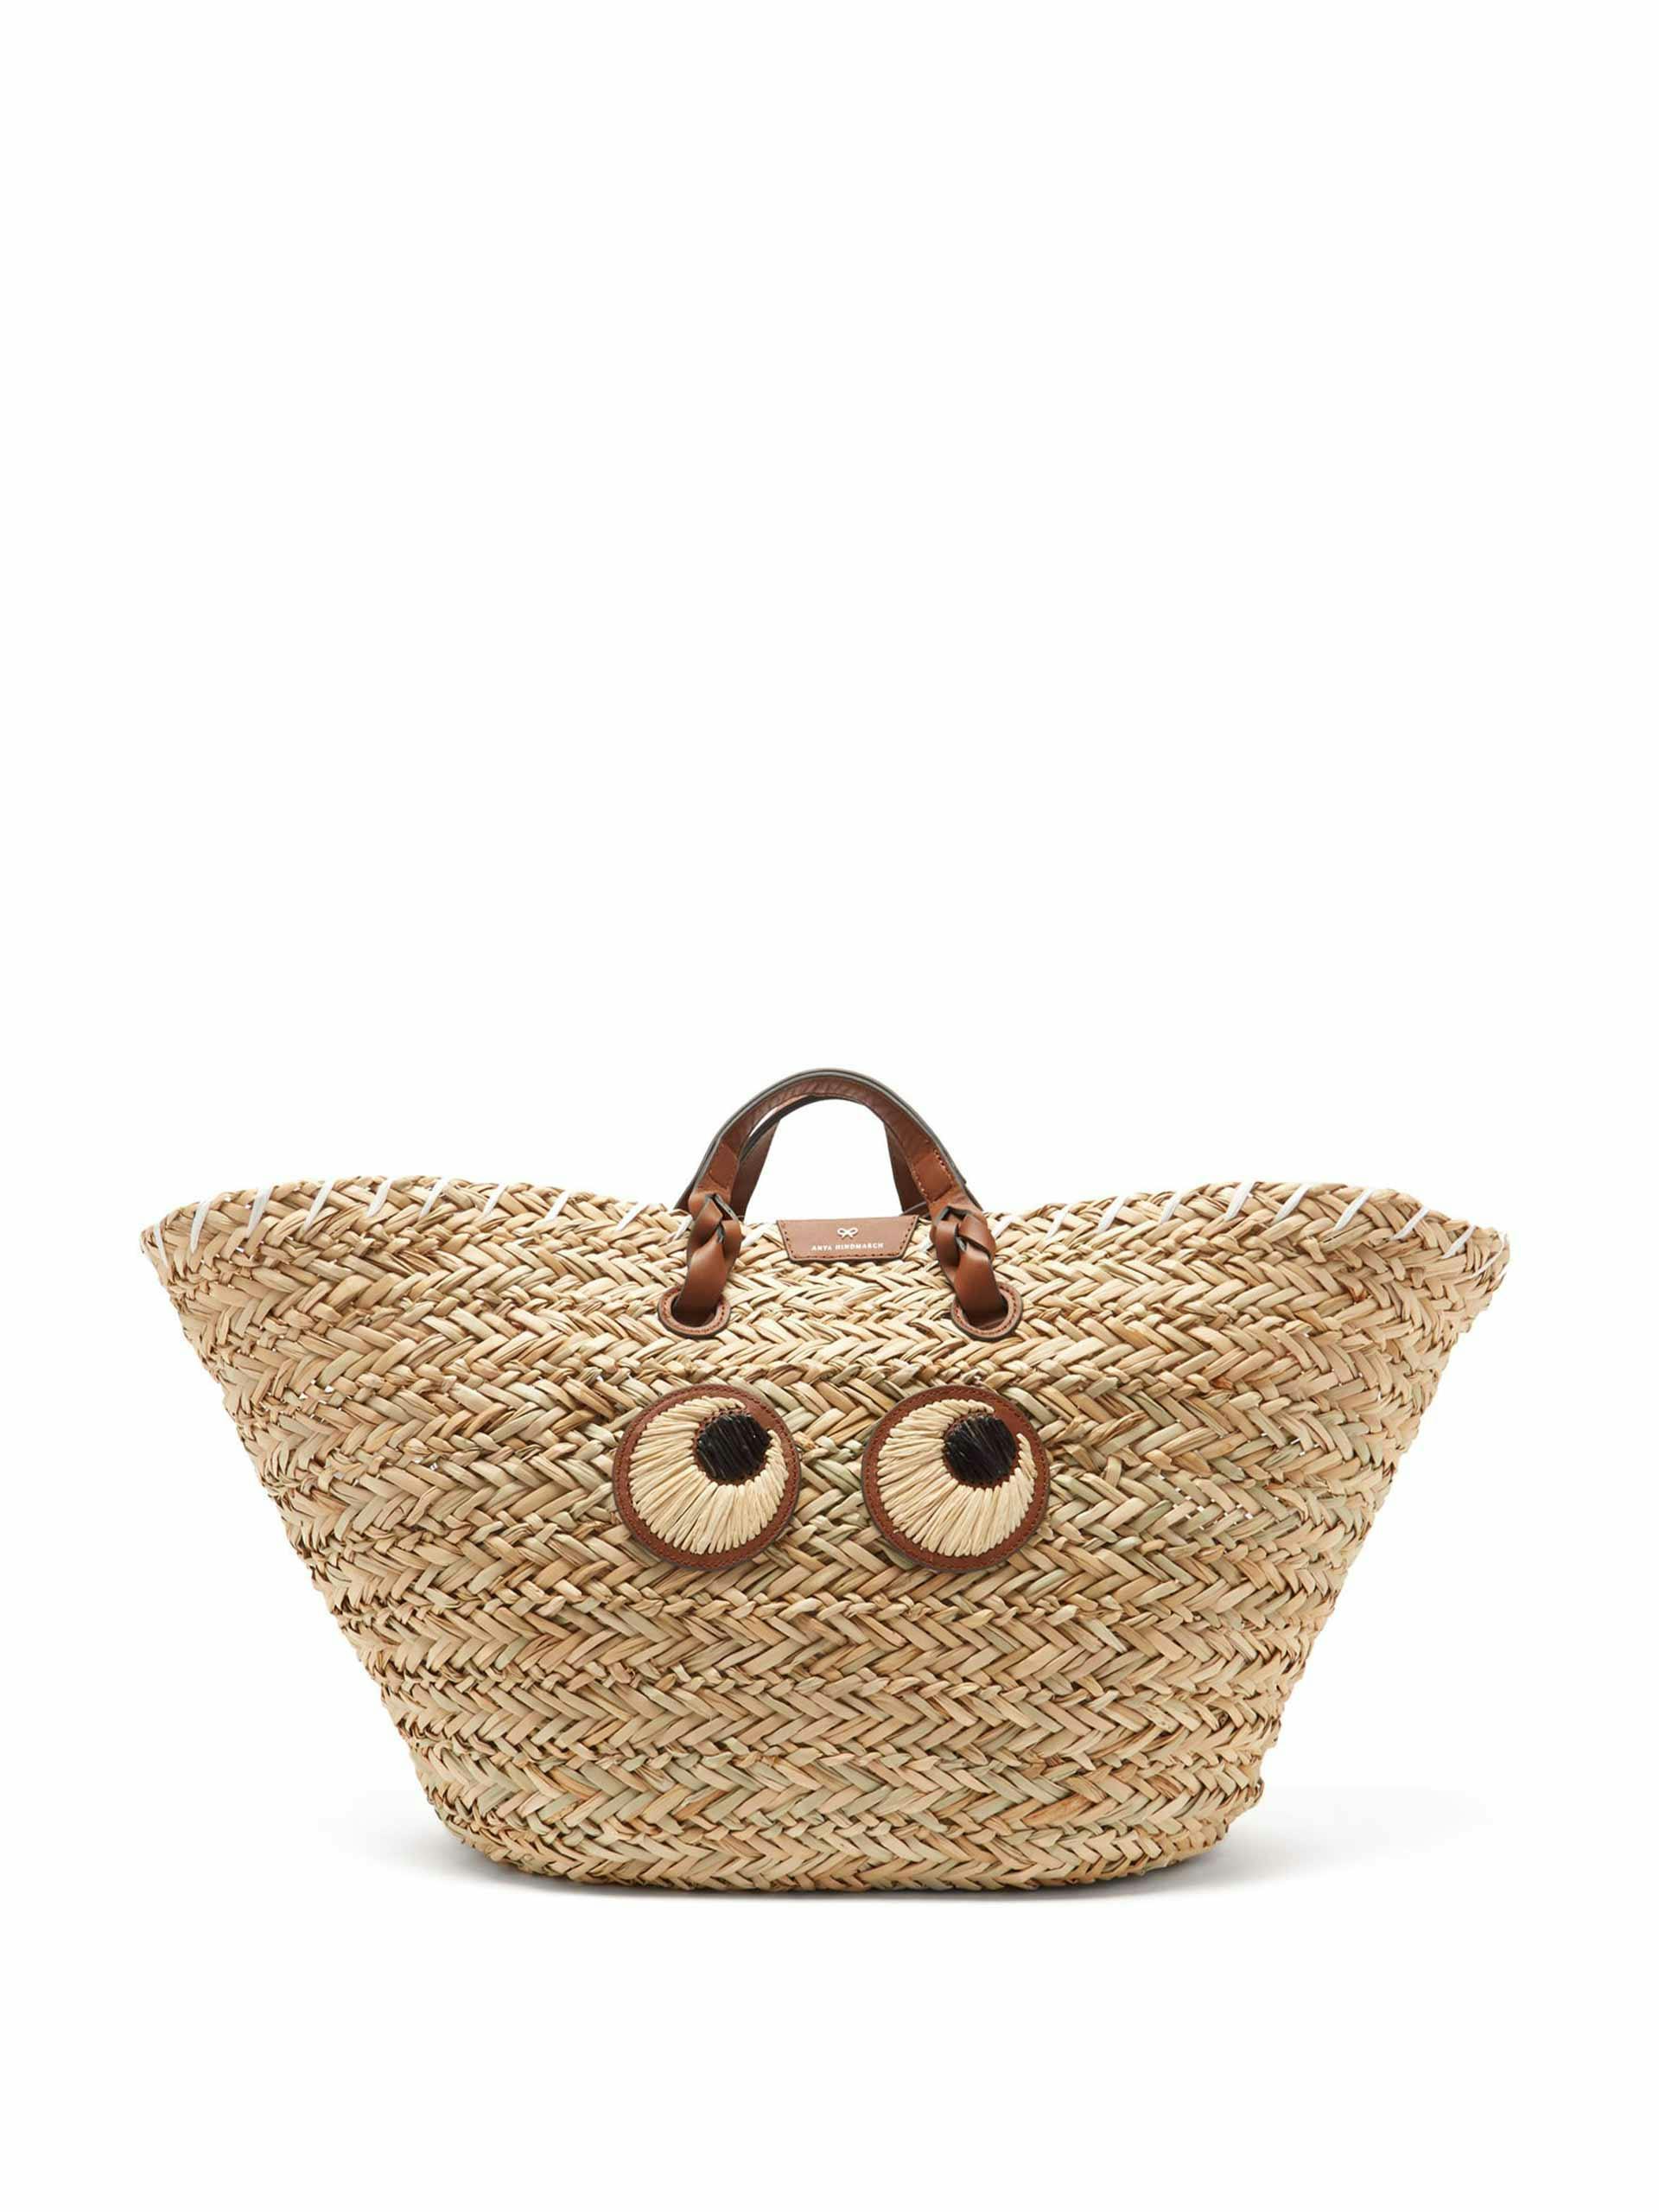 Woven seagrass basket bag